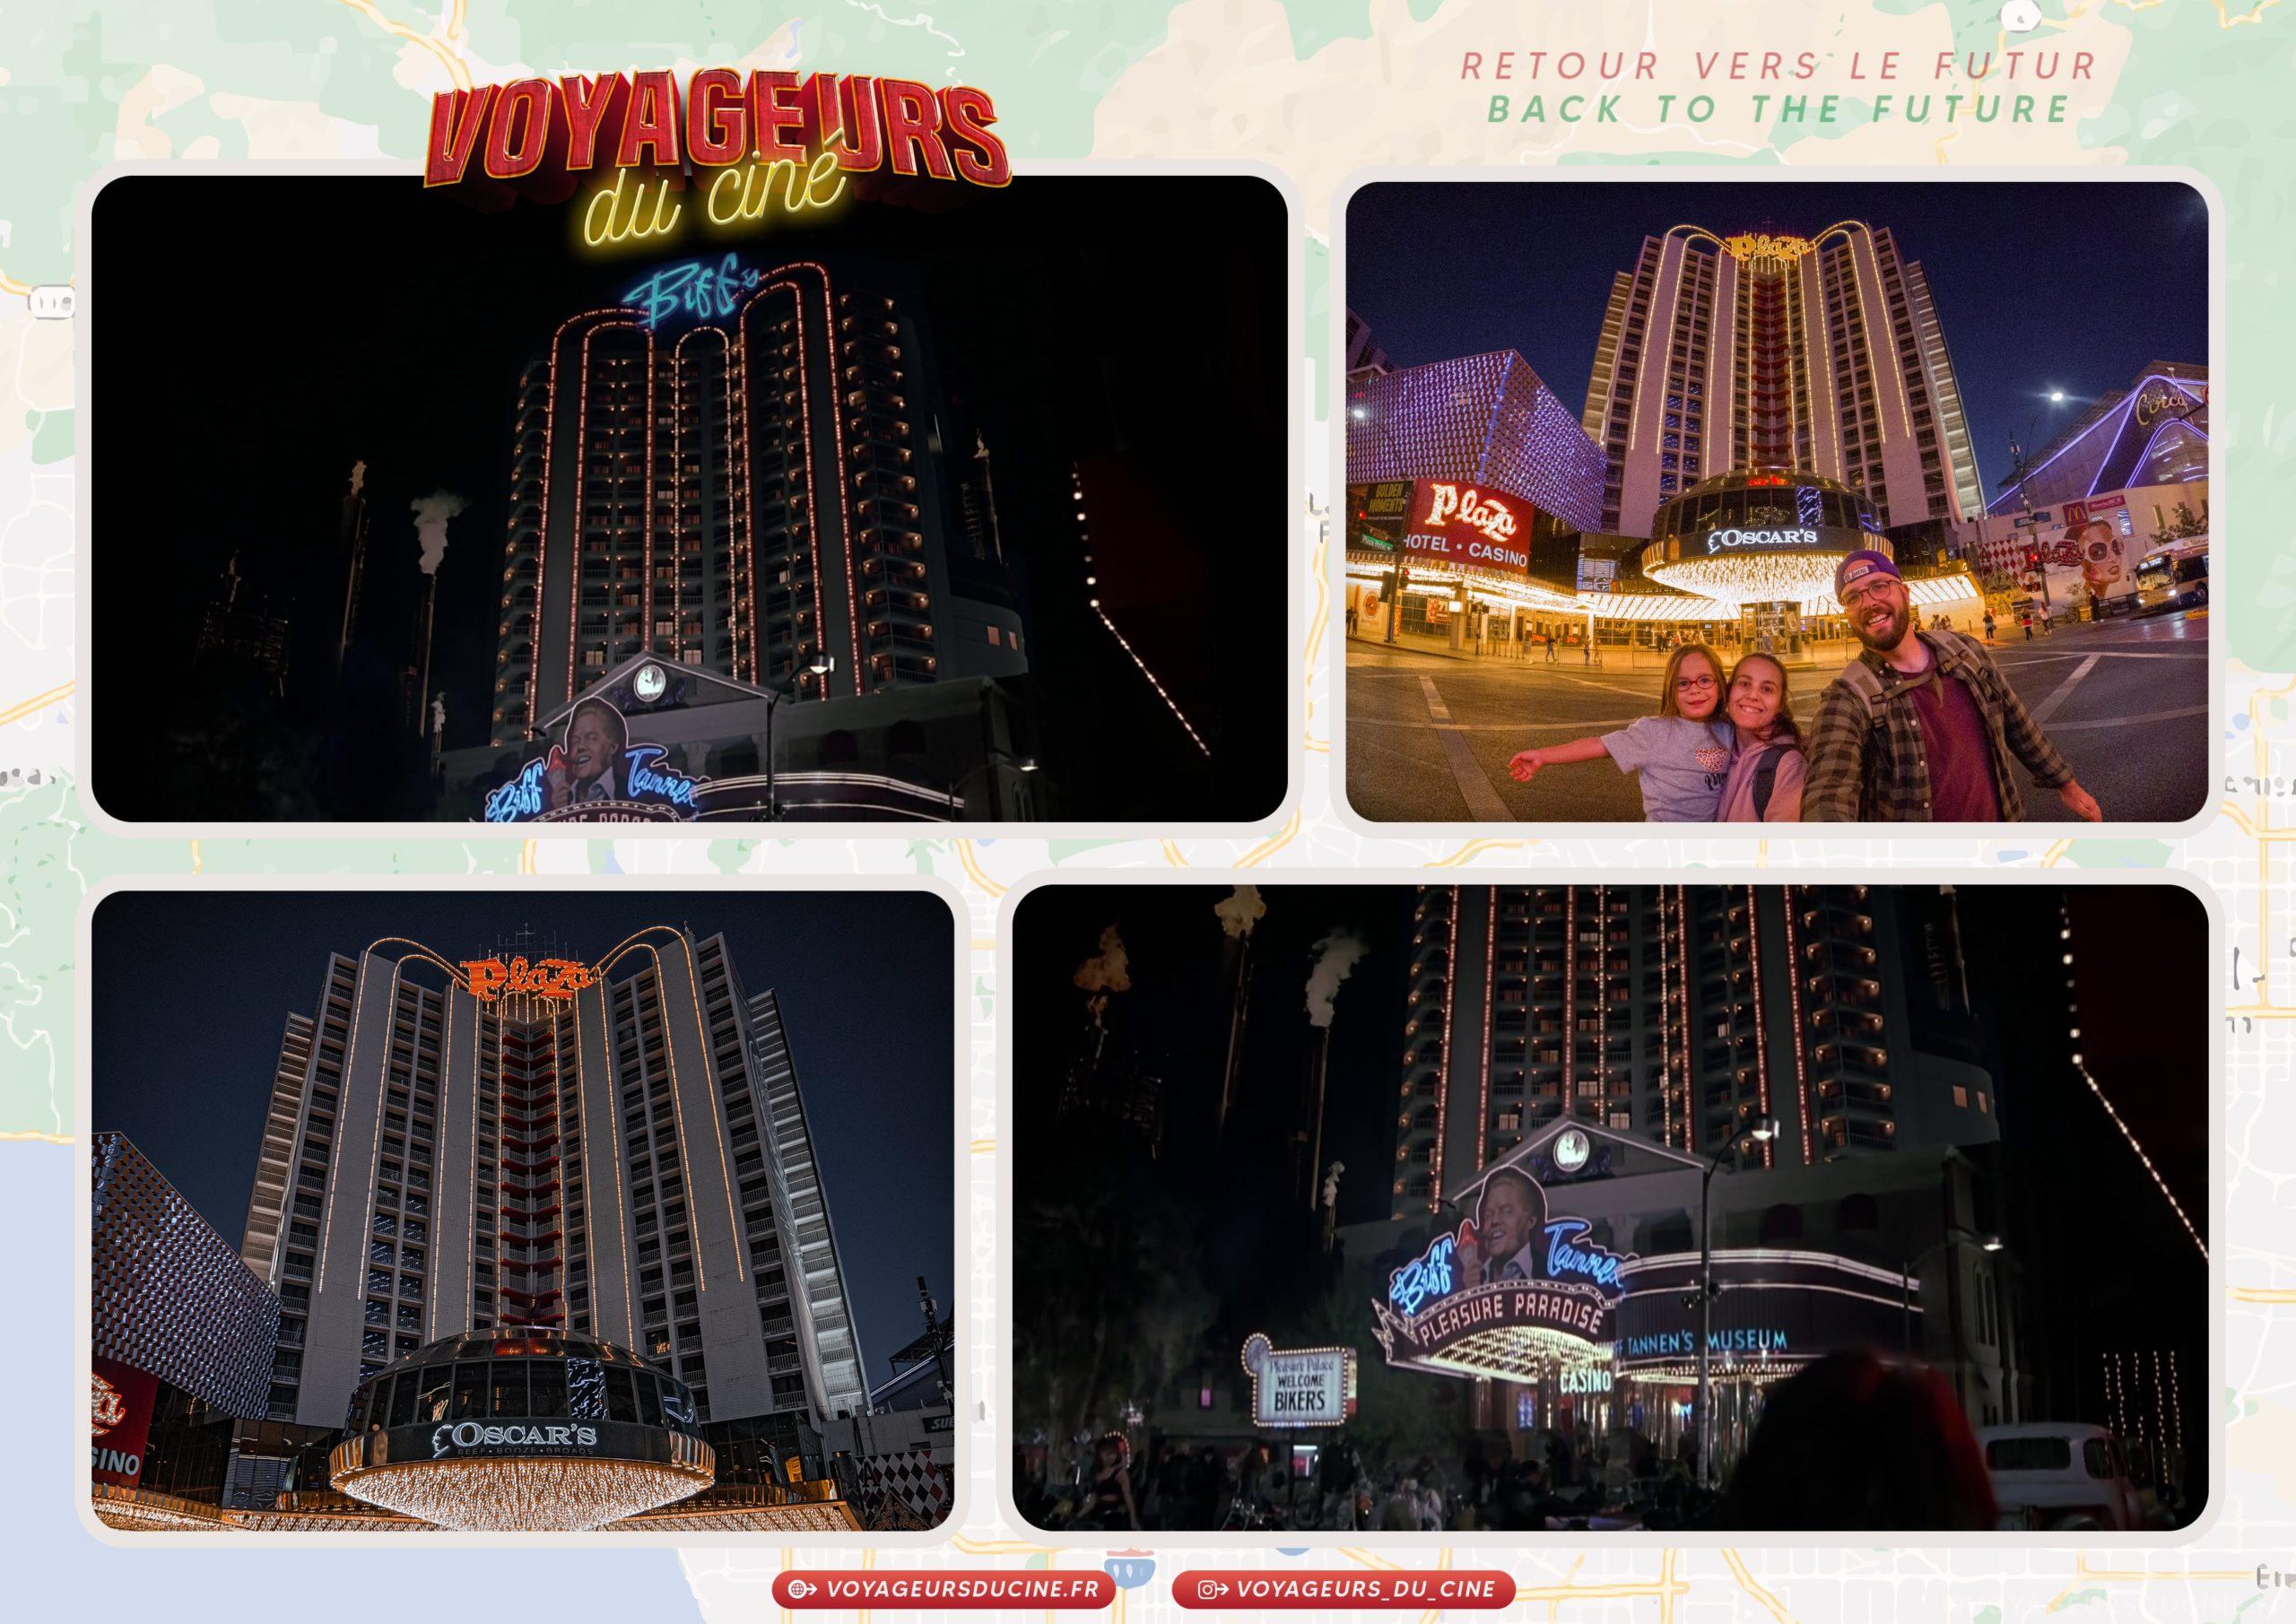 Casino et Hotel de Biff Tannen retour vers le futur 2- Pleasure Paradise in Las vegas Back to the future 2